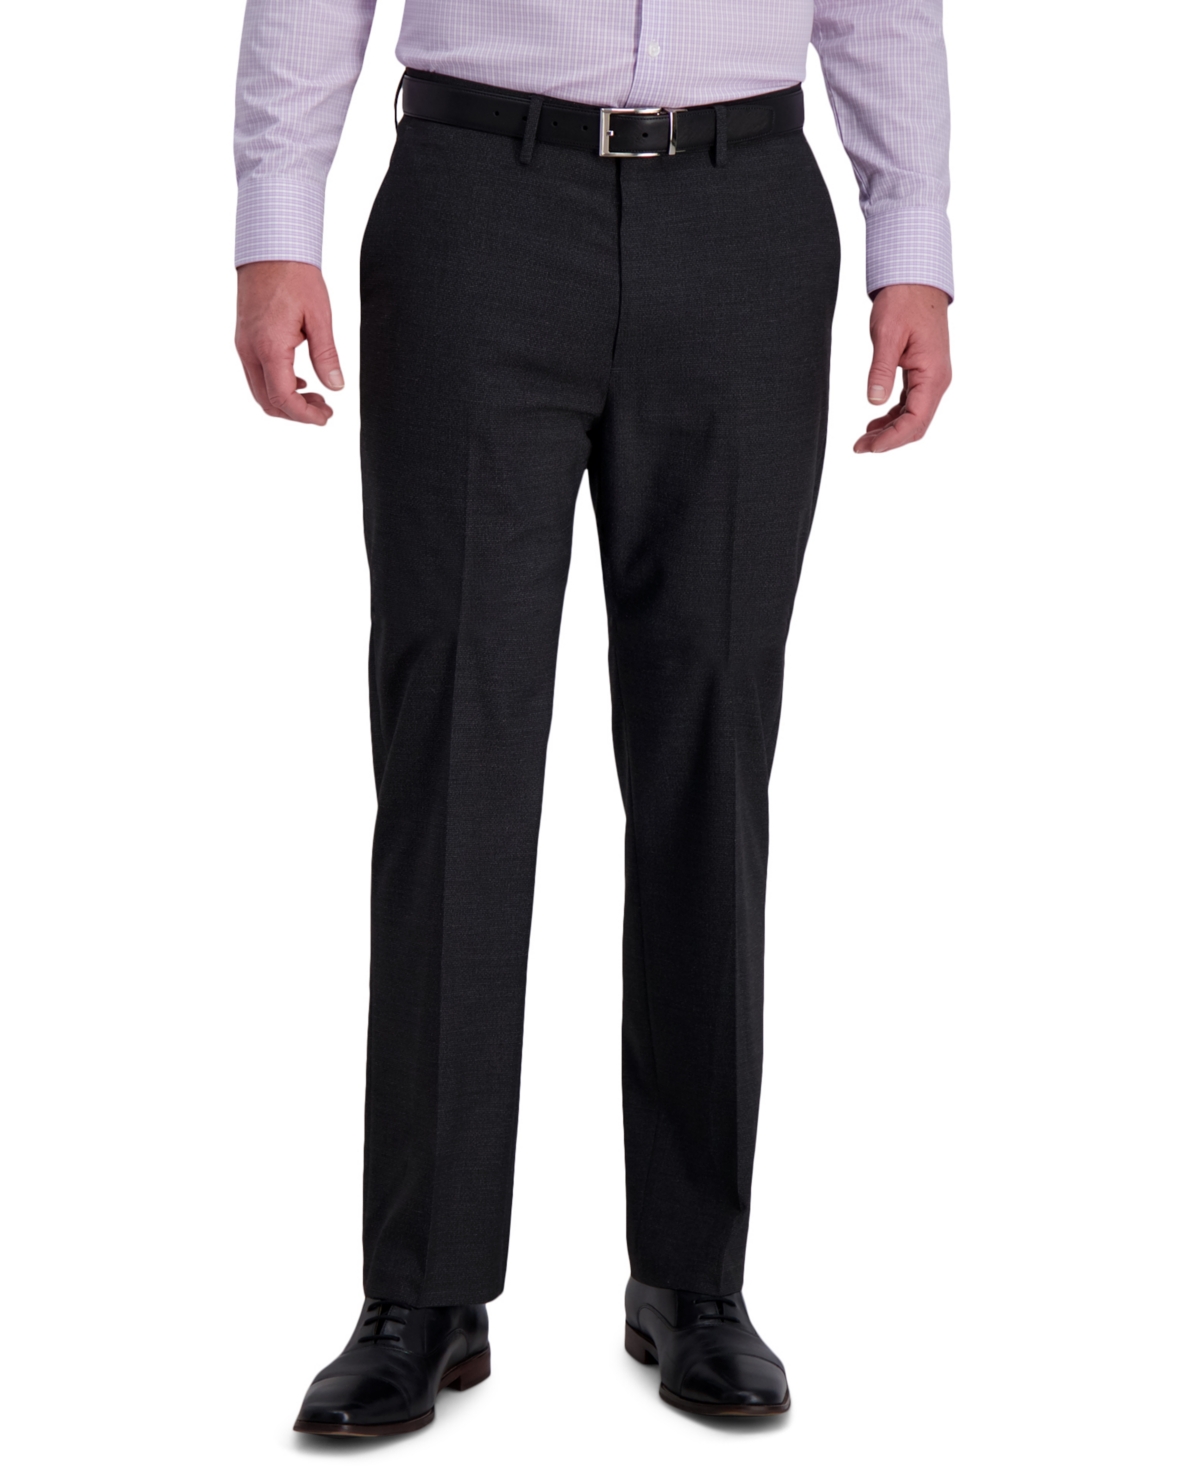 J.m. Haggar Men's Classic-Fit 4-Way Stretch Textured Grid Performance Dress Pants - Charcoal